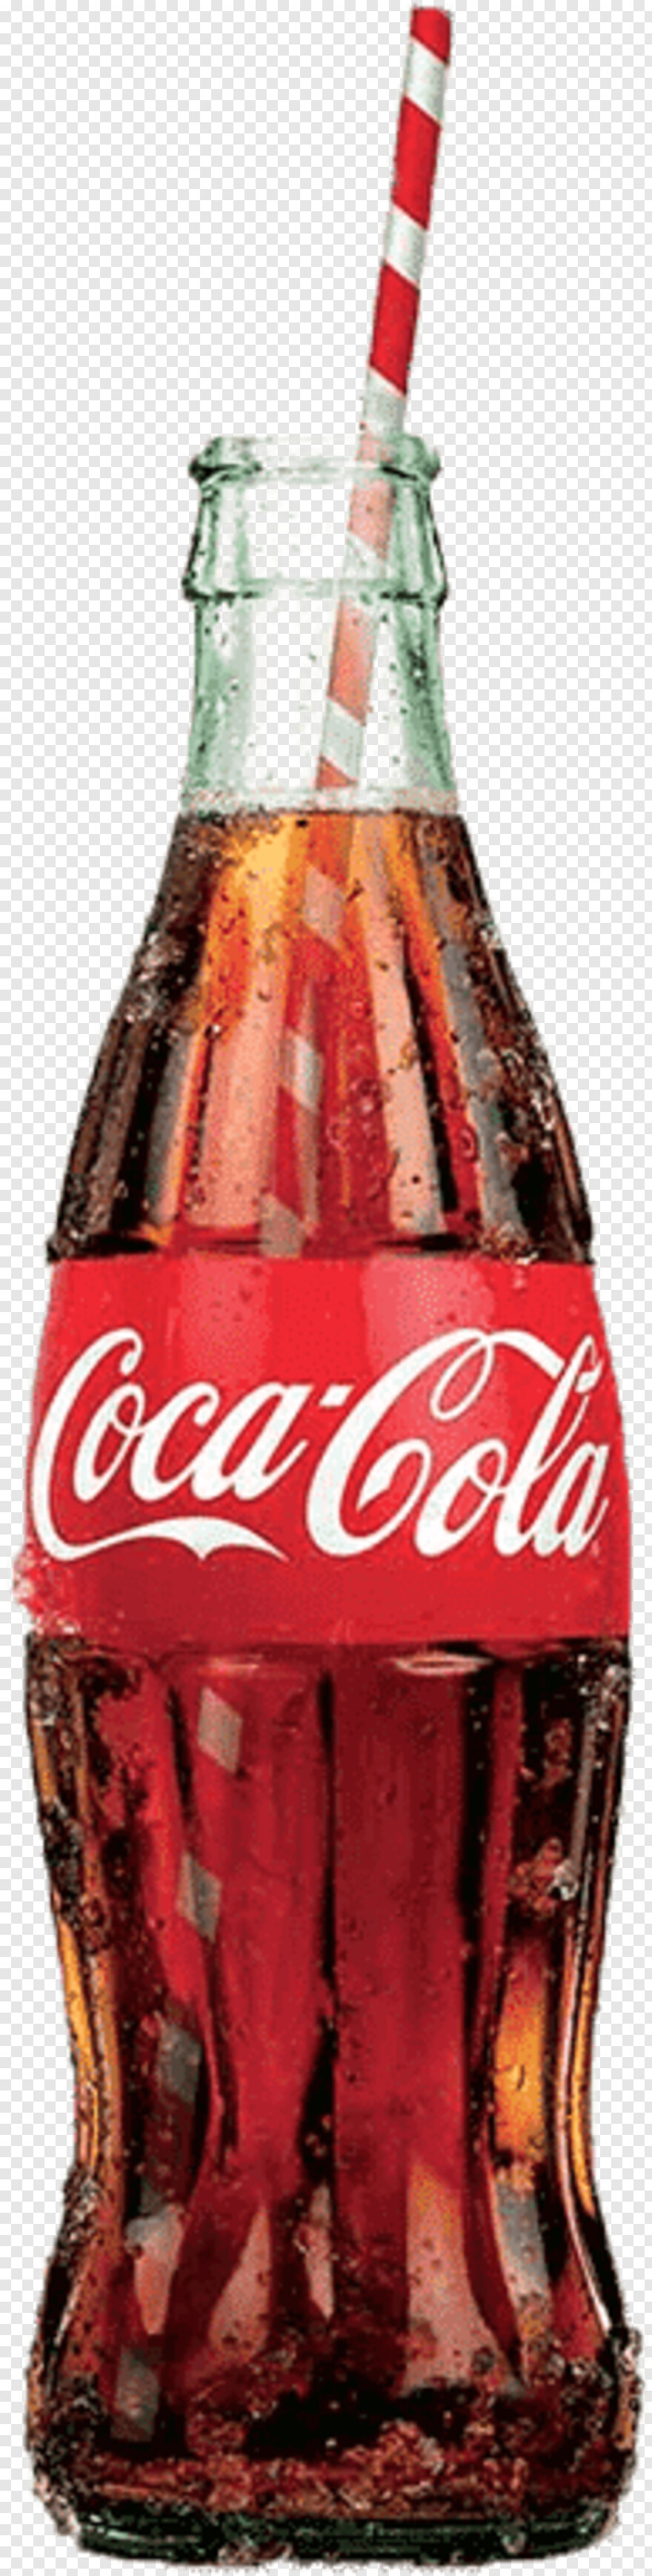 coca-cola # 326480